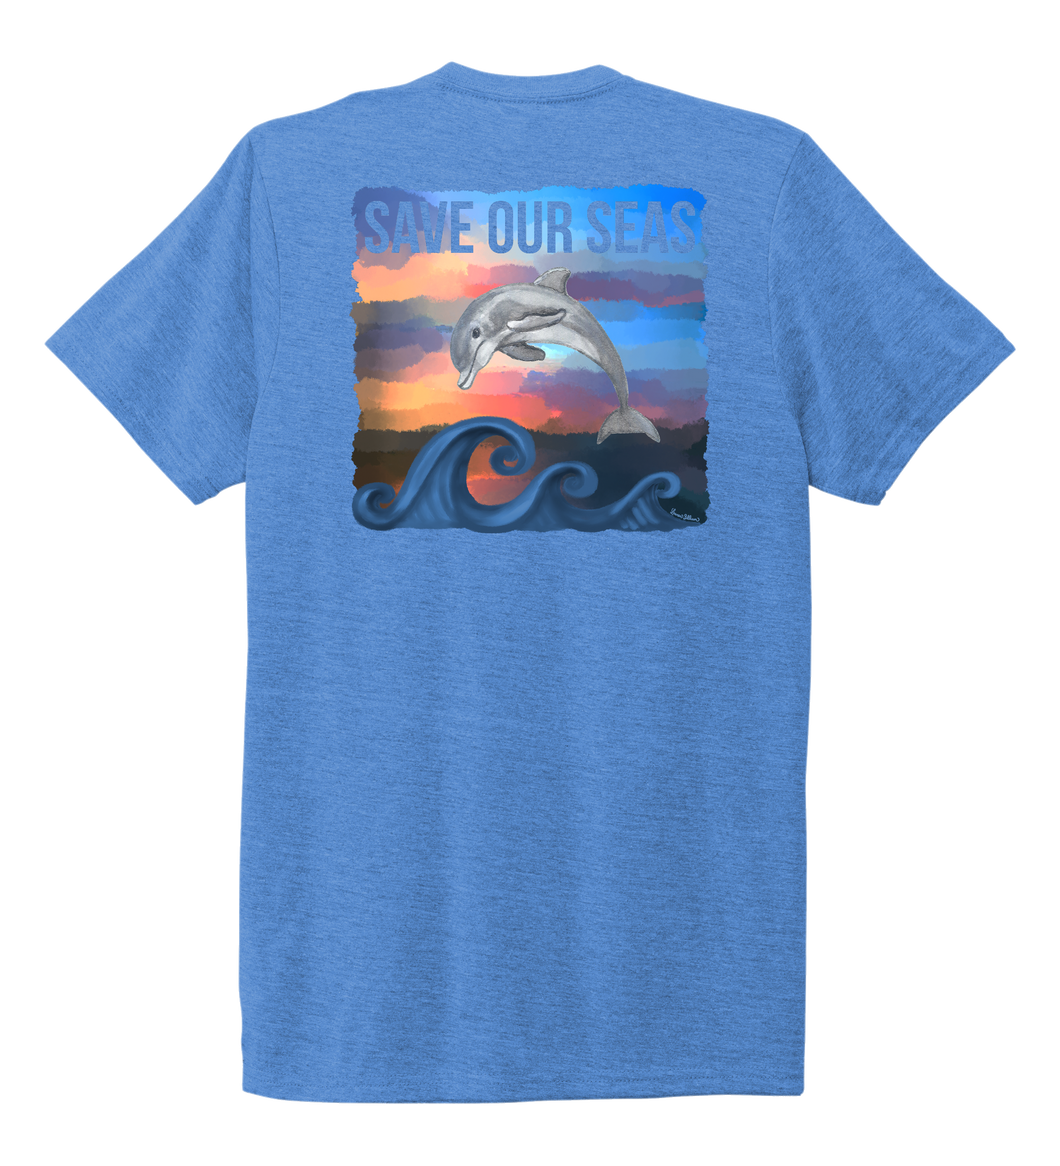 Lauren Gilliam, Dolphin, Unisex Crew Neck T-shirt in Sky Blue